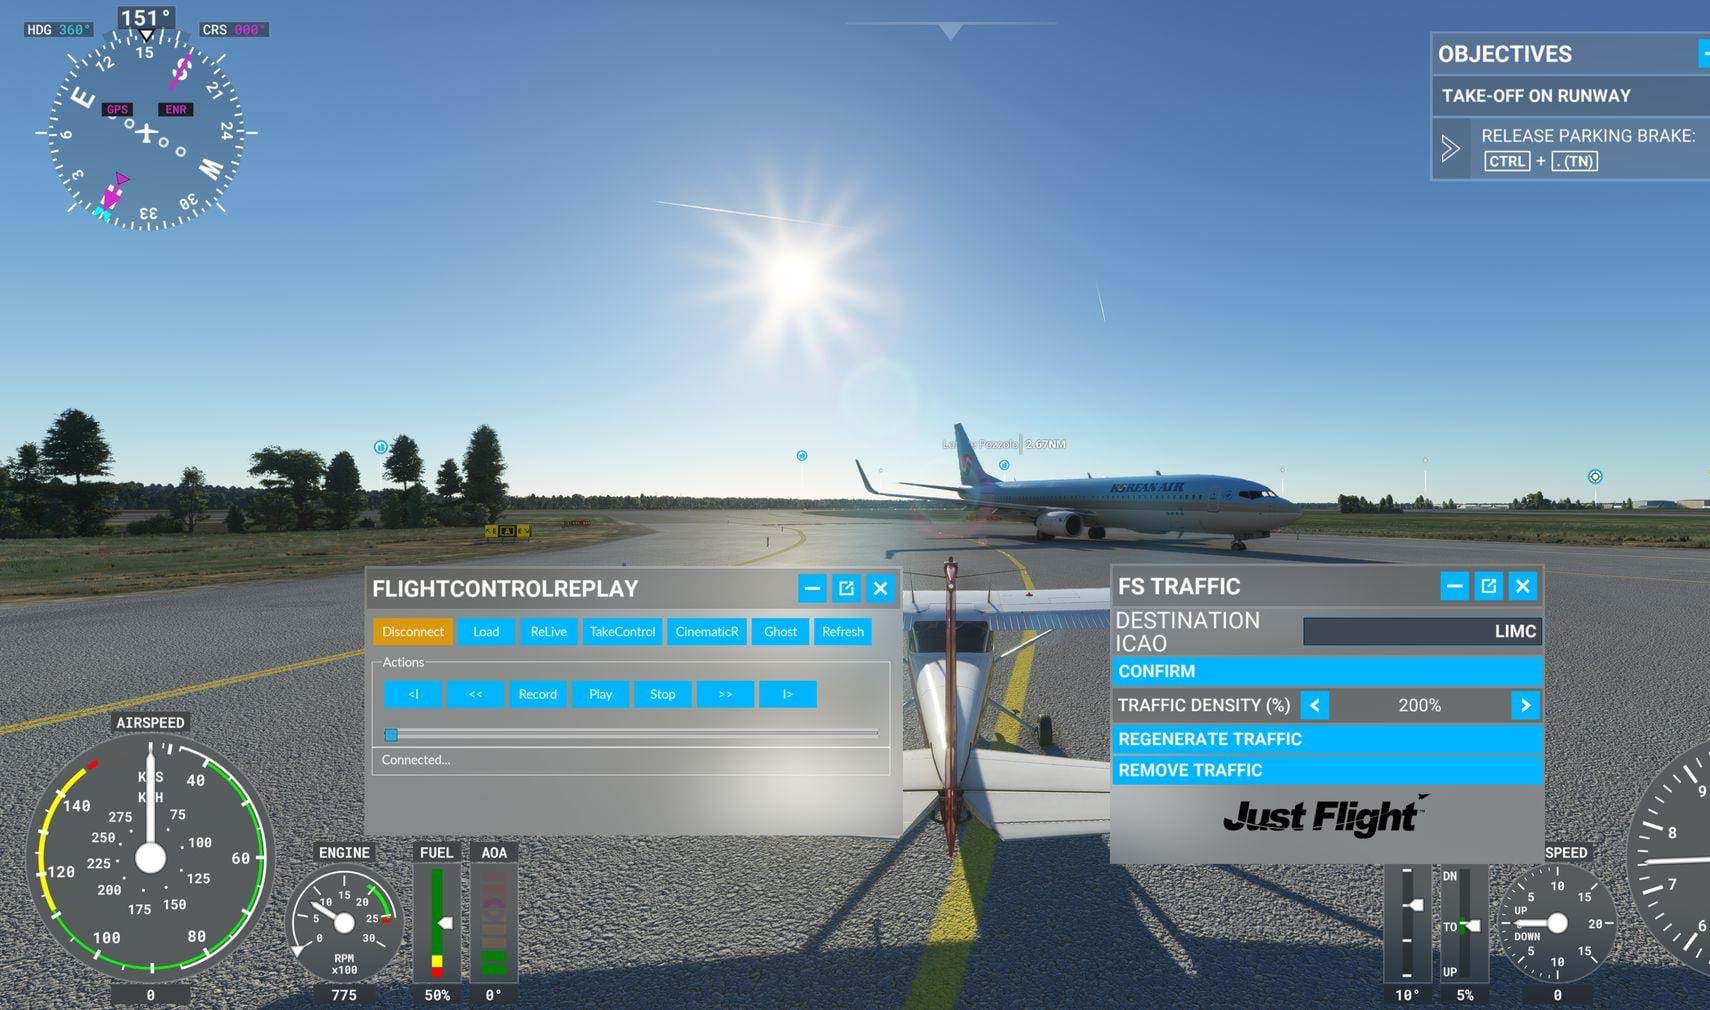 Flight Control Replay and Just Flight FS Traffic